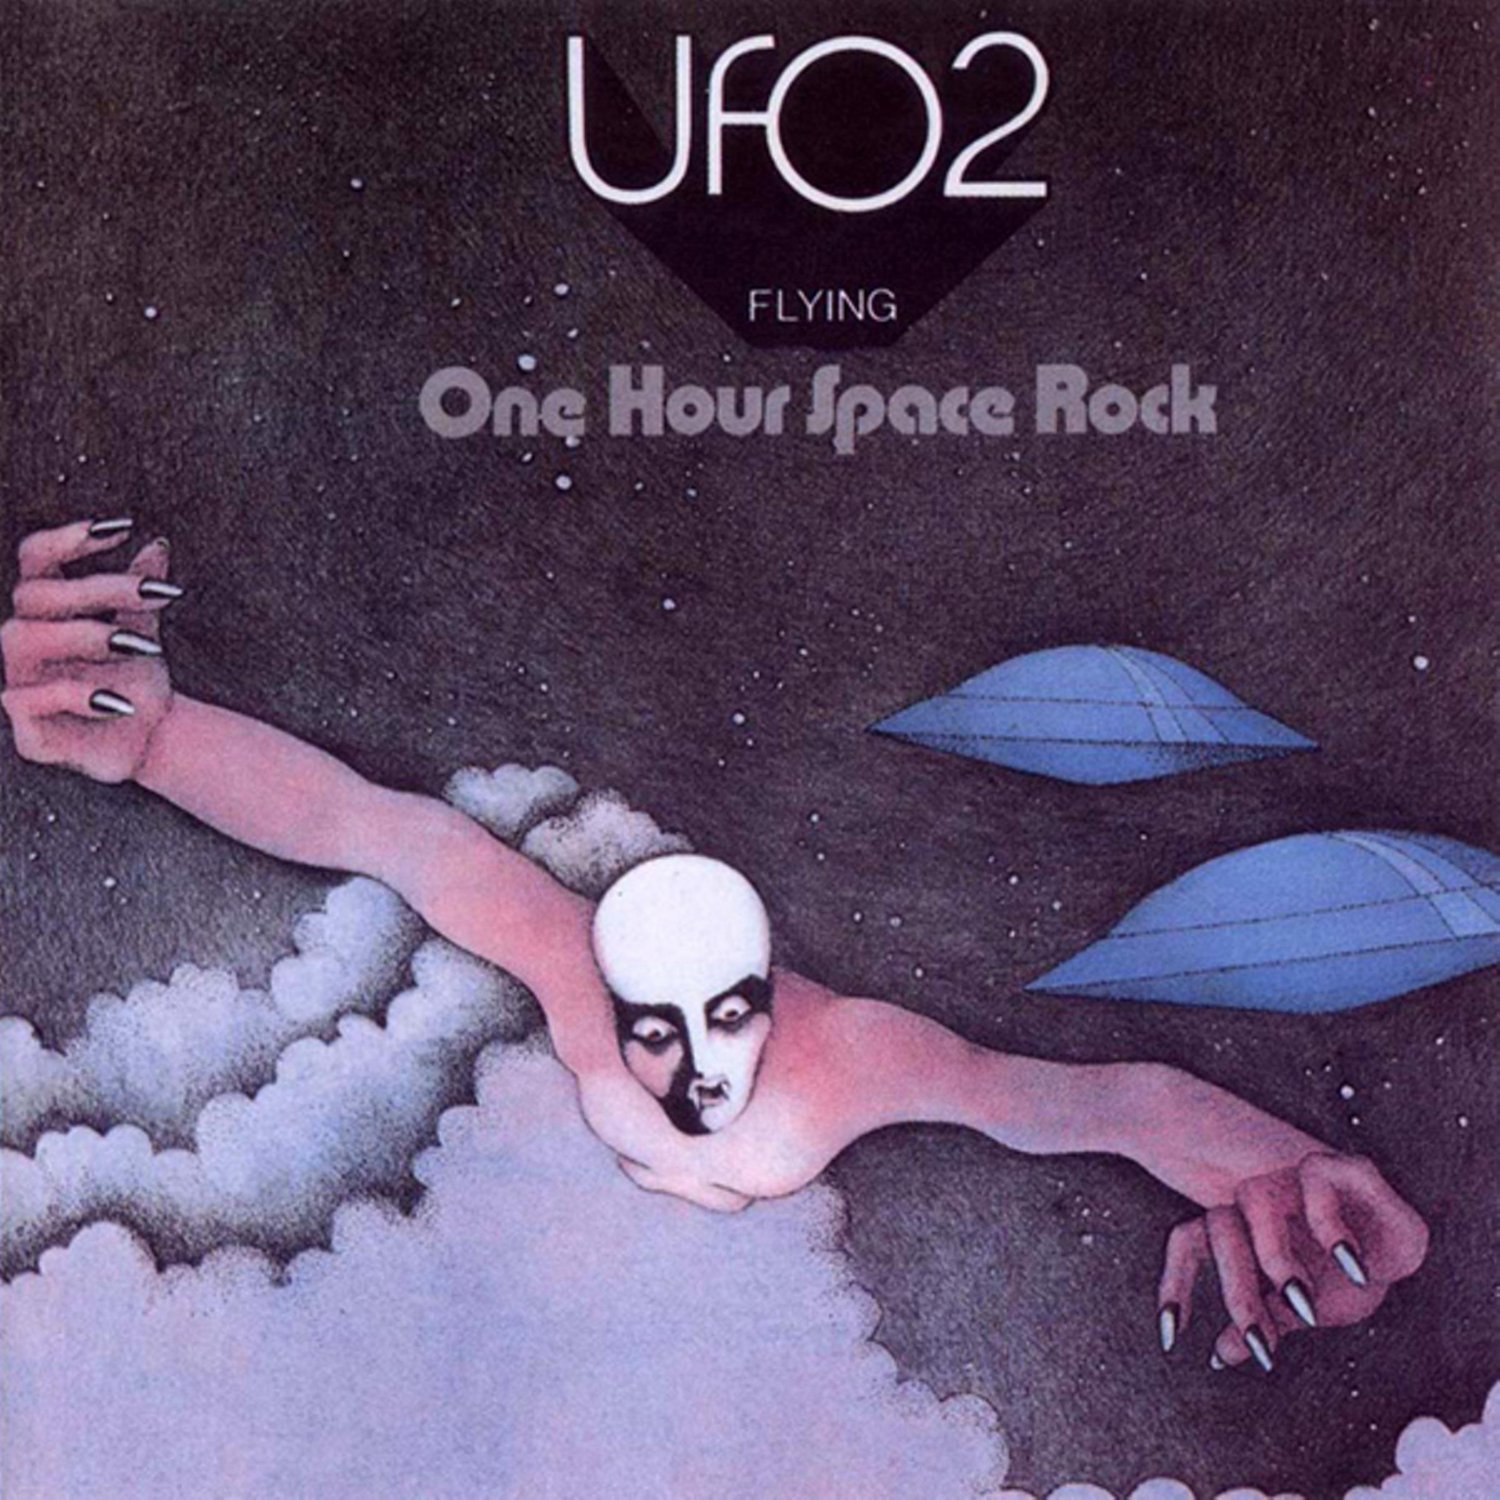 UFO UFO2 Flying BANNER Huge 4X4 Ft Fabric Poster Tapestry Flag Print album cover art